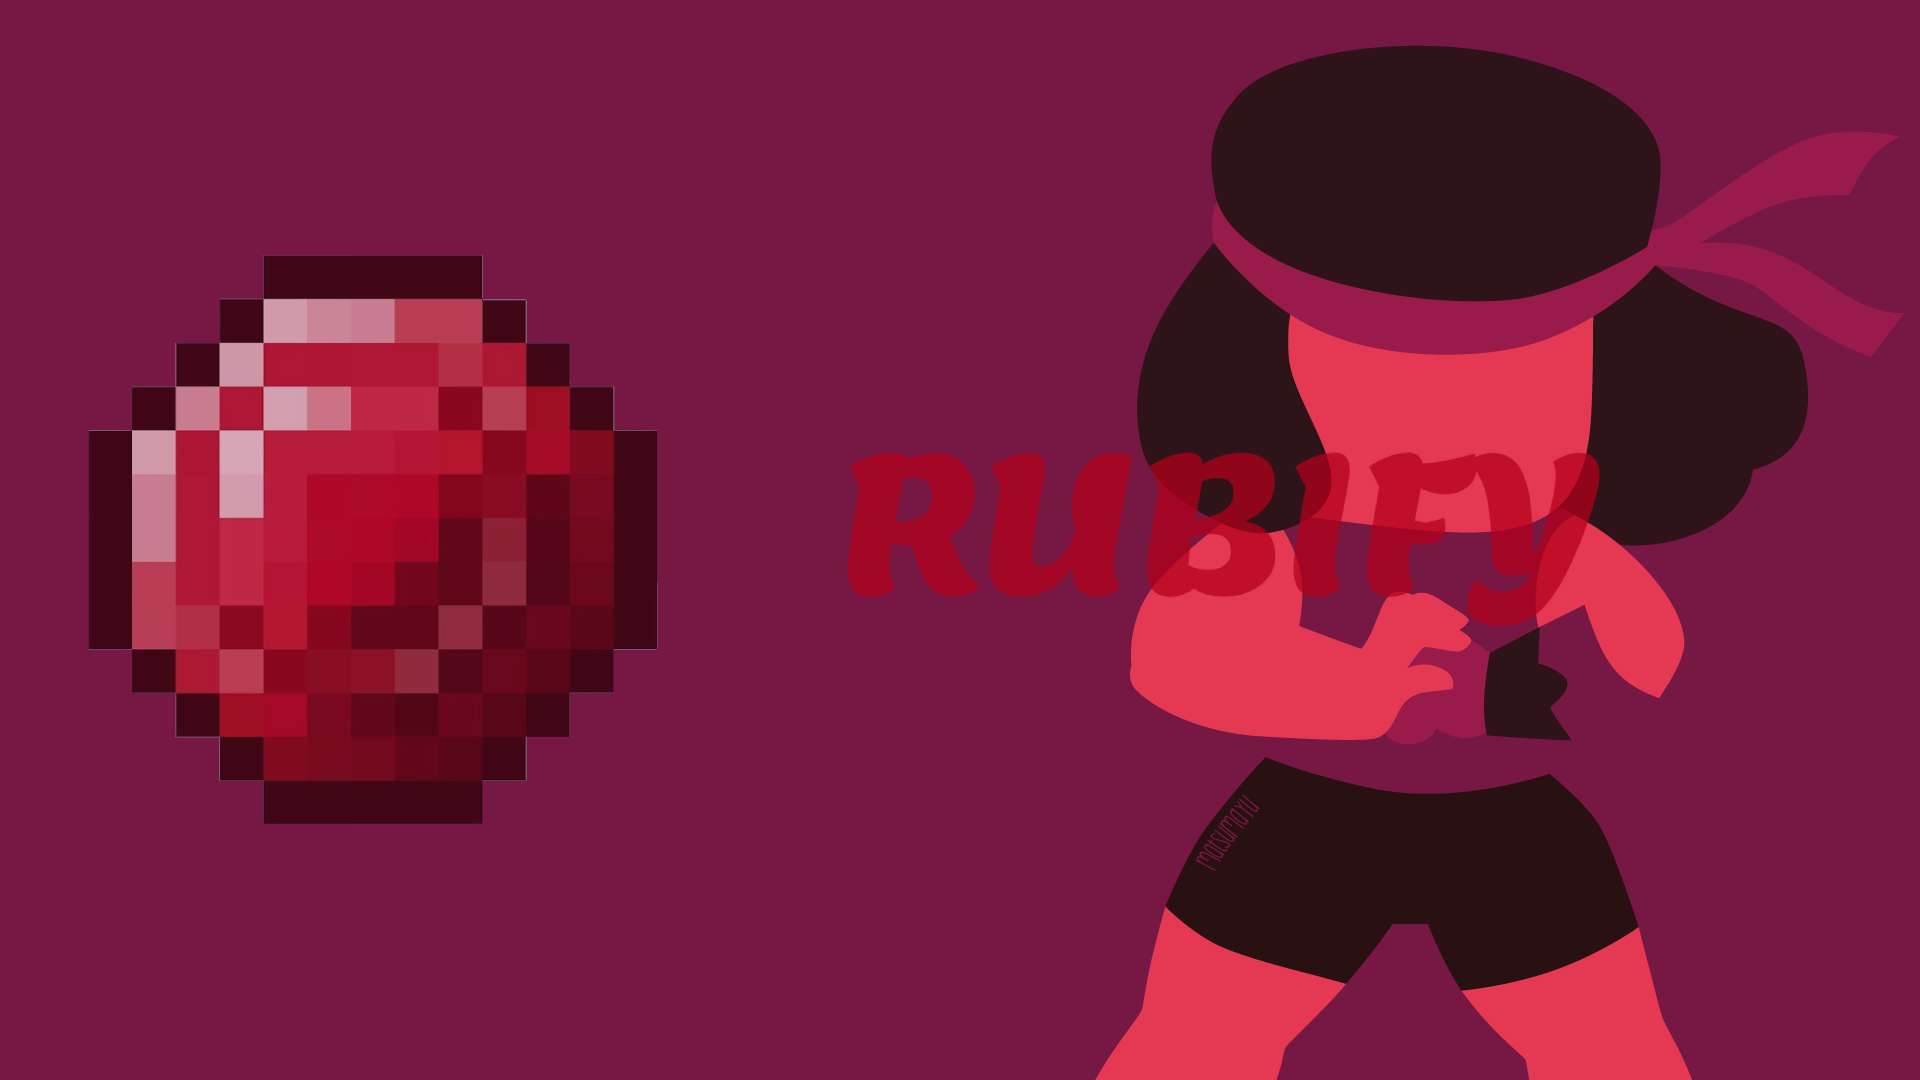 Rubify [64x] 64x by uLucsz & By uLucsz on PvPRP